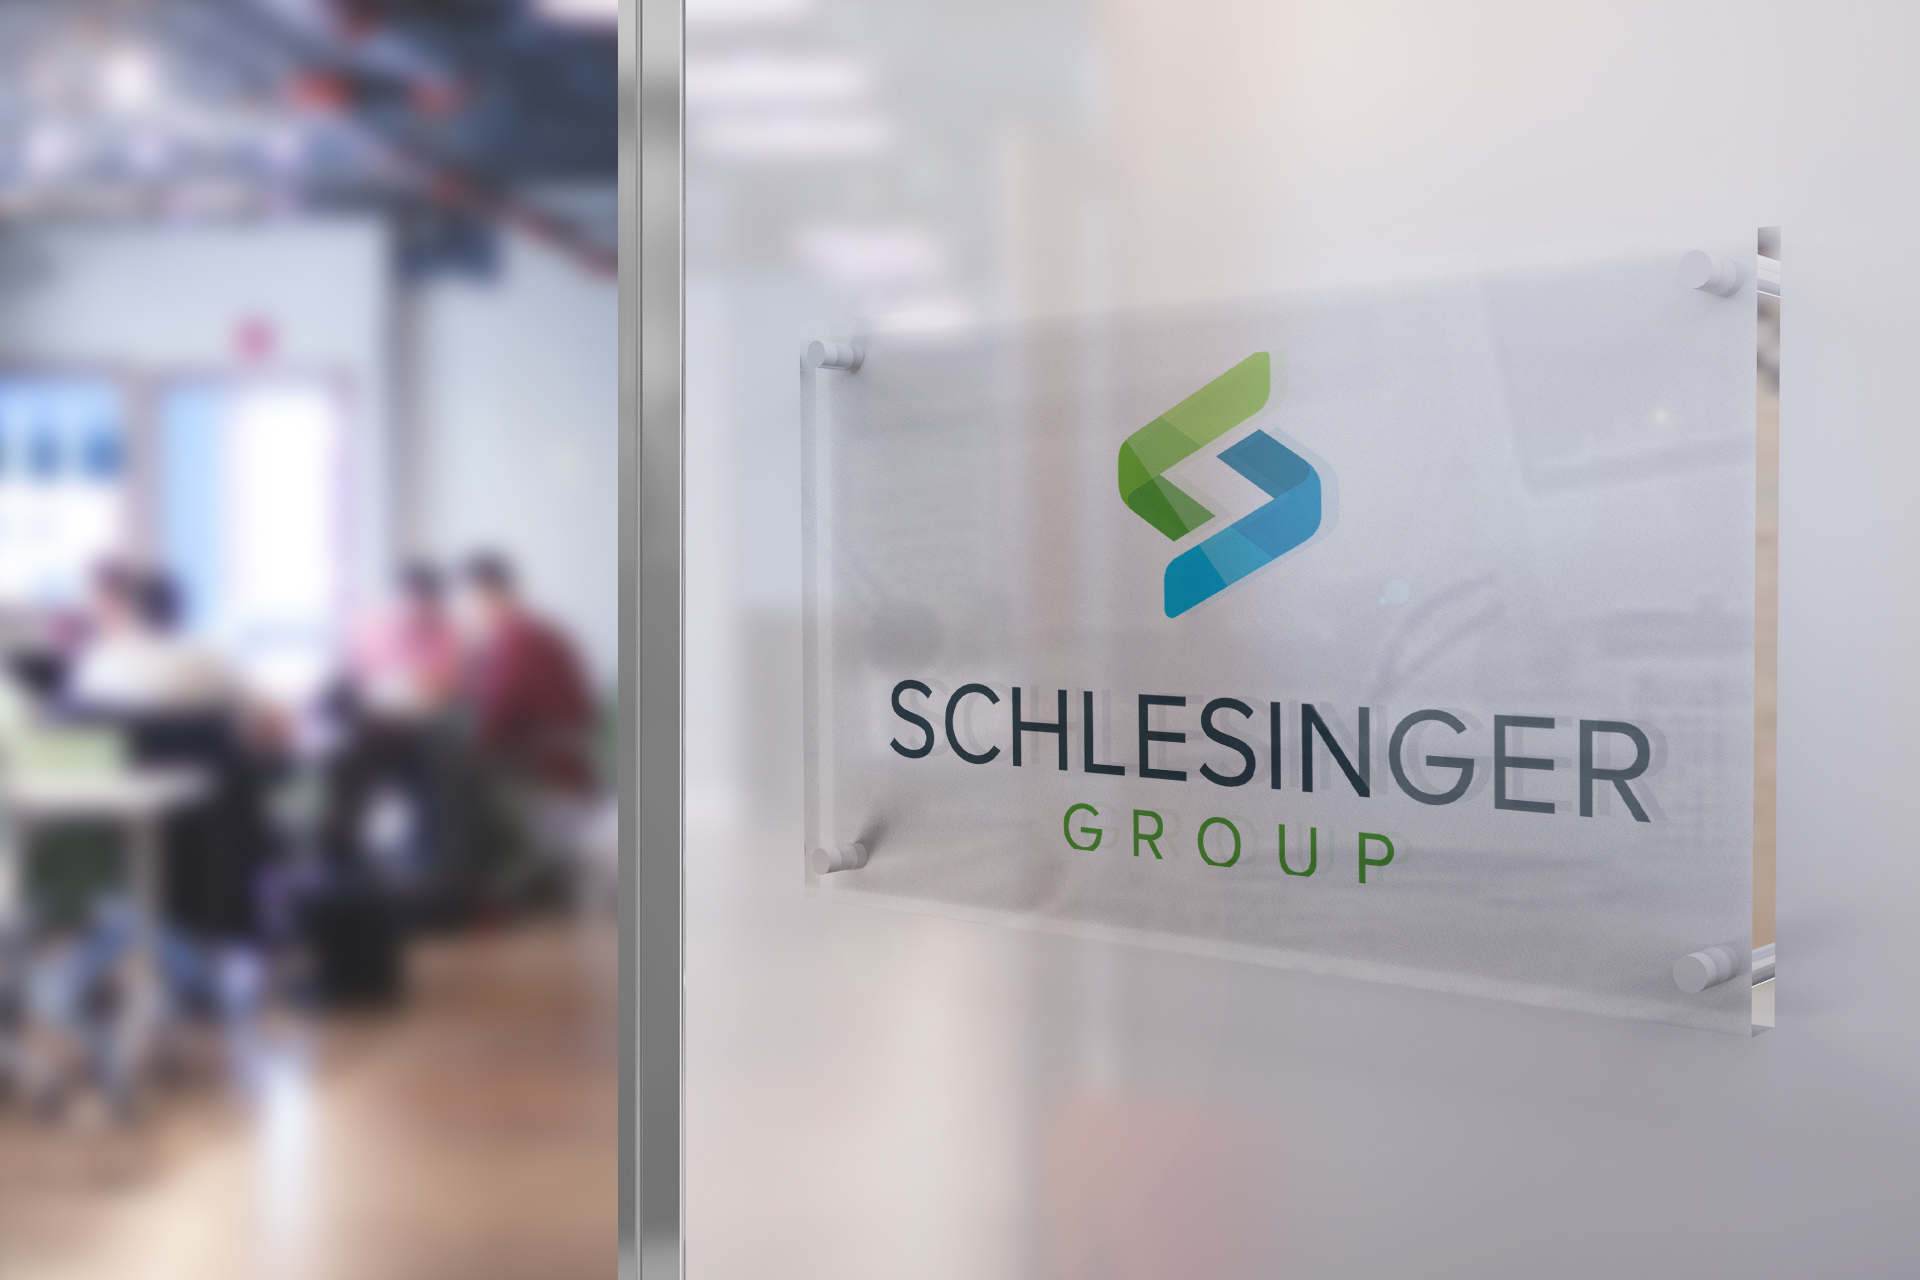 Schlesinger Group conference